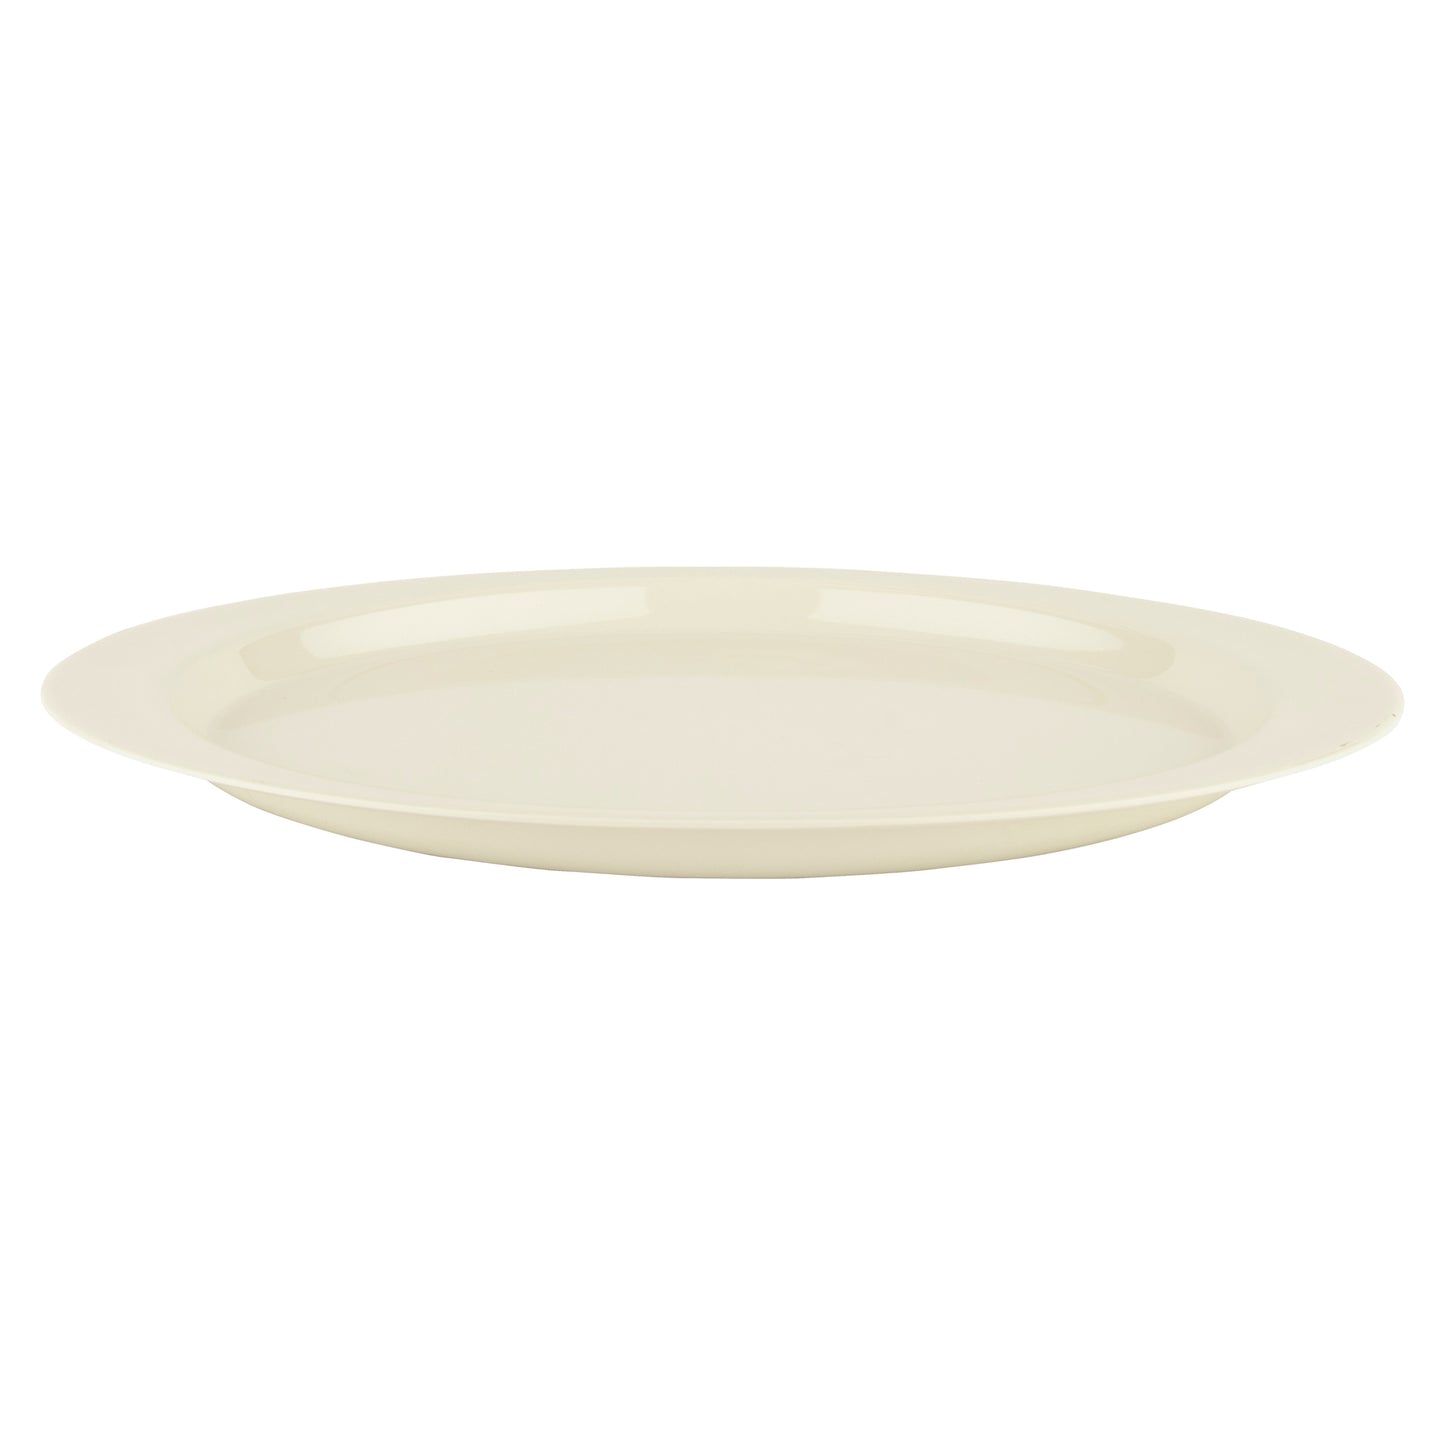 14.75" x 10.5" Oval Platter (12 Pack)